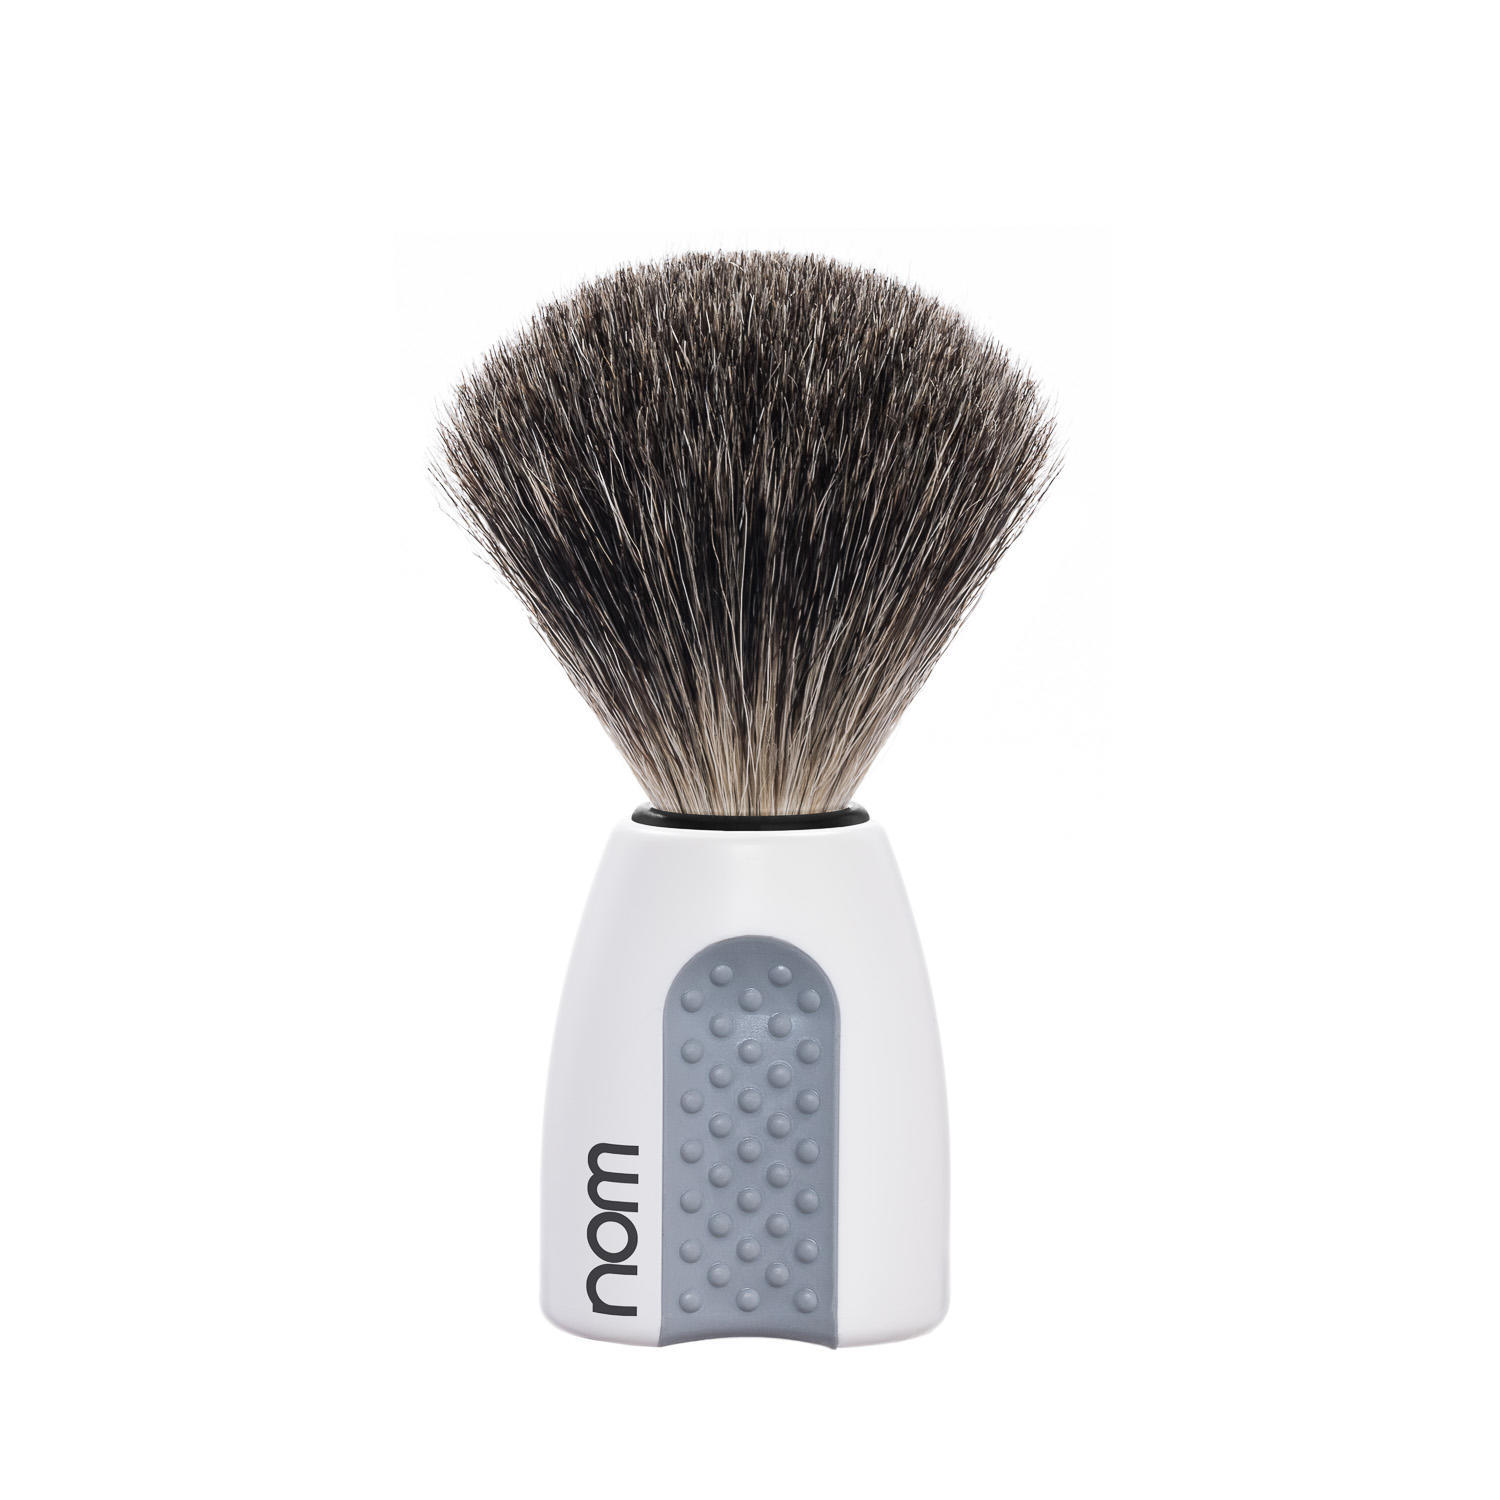 ERIK81WH NOM, ERIK white, pure badger shaving brush